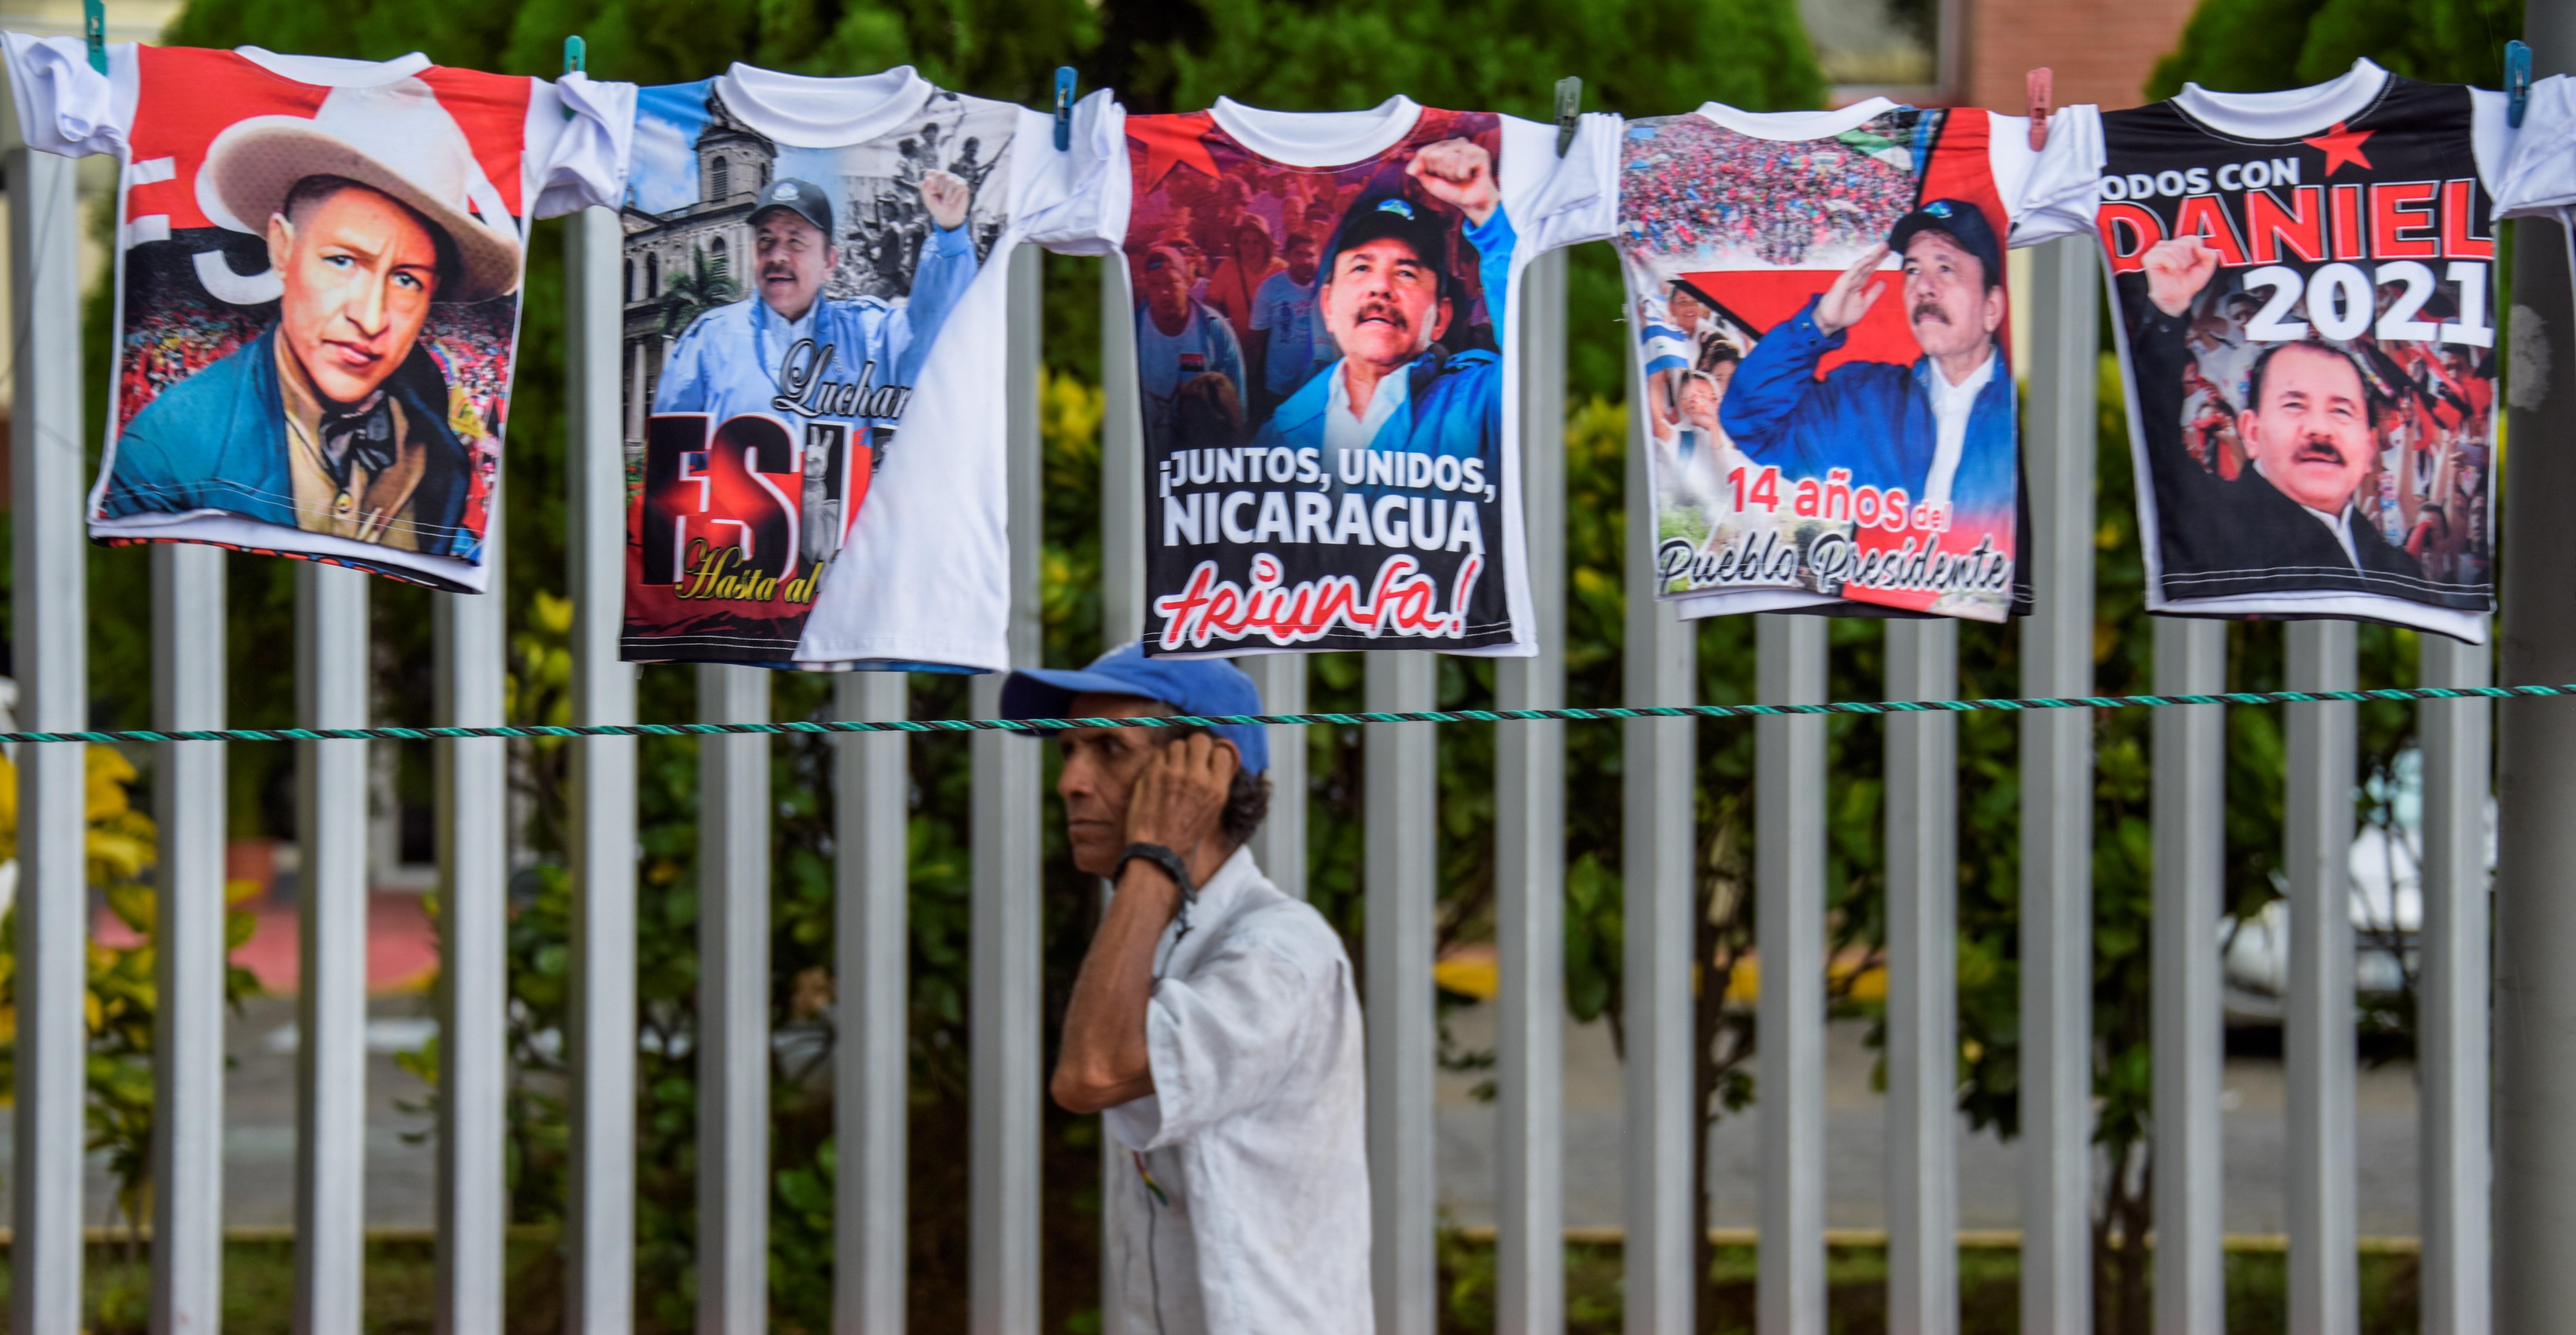 Daniel Ortega political flags hanging